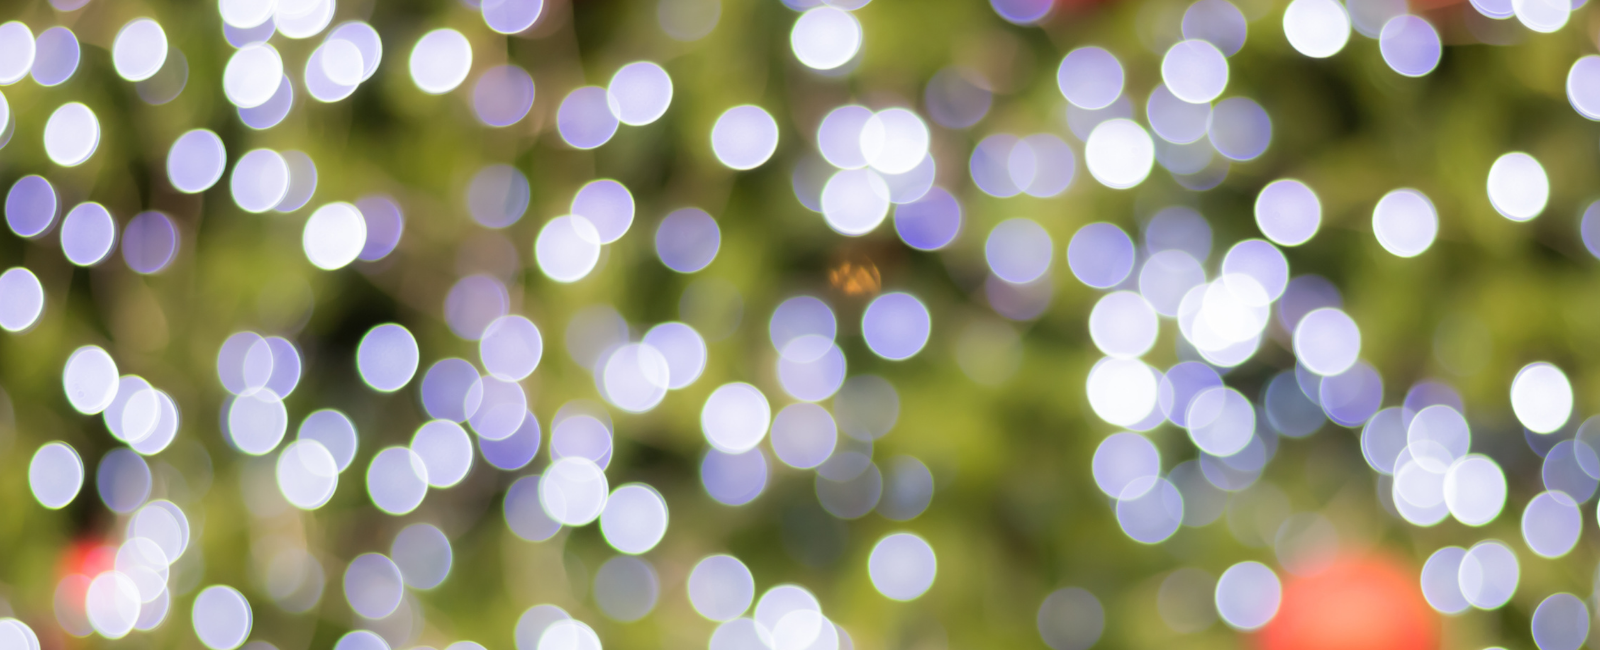 blur of Chrismas tree lights